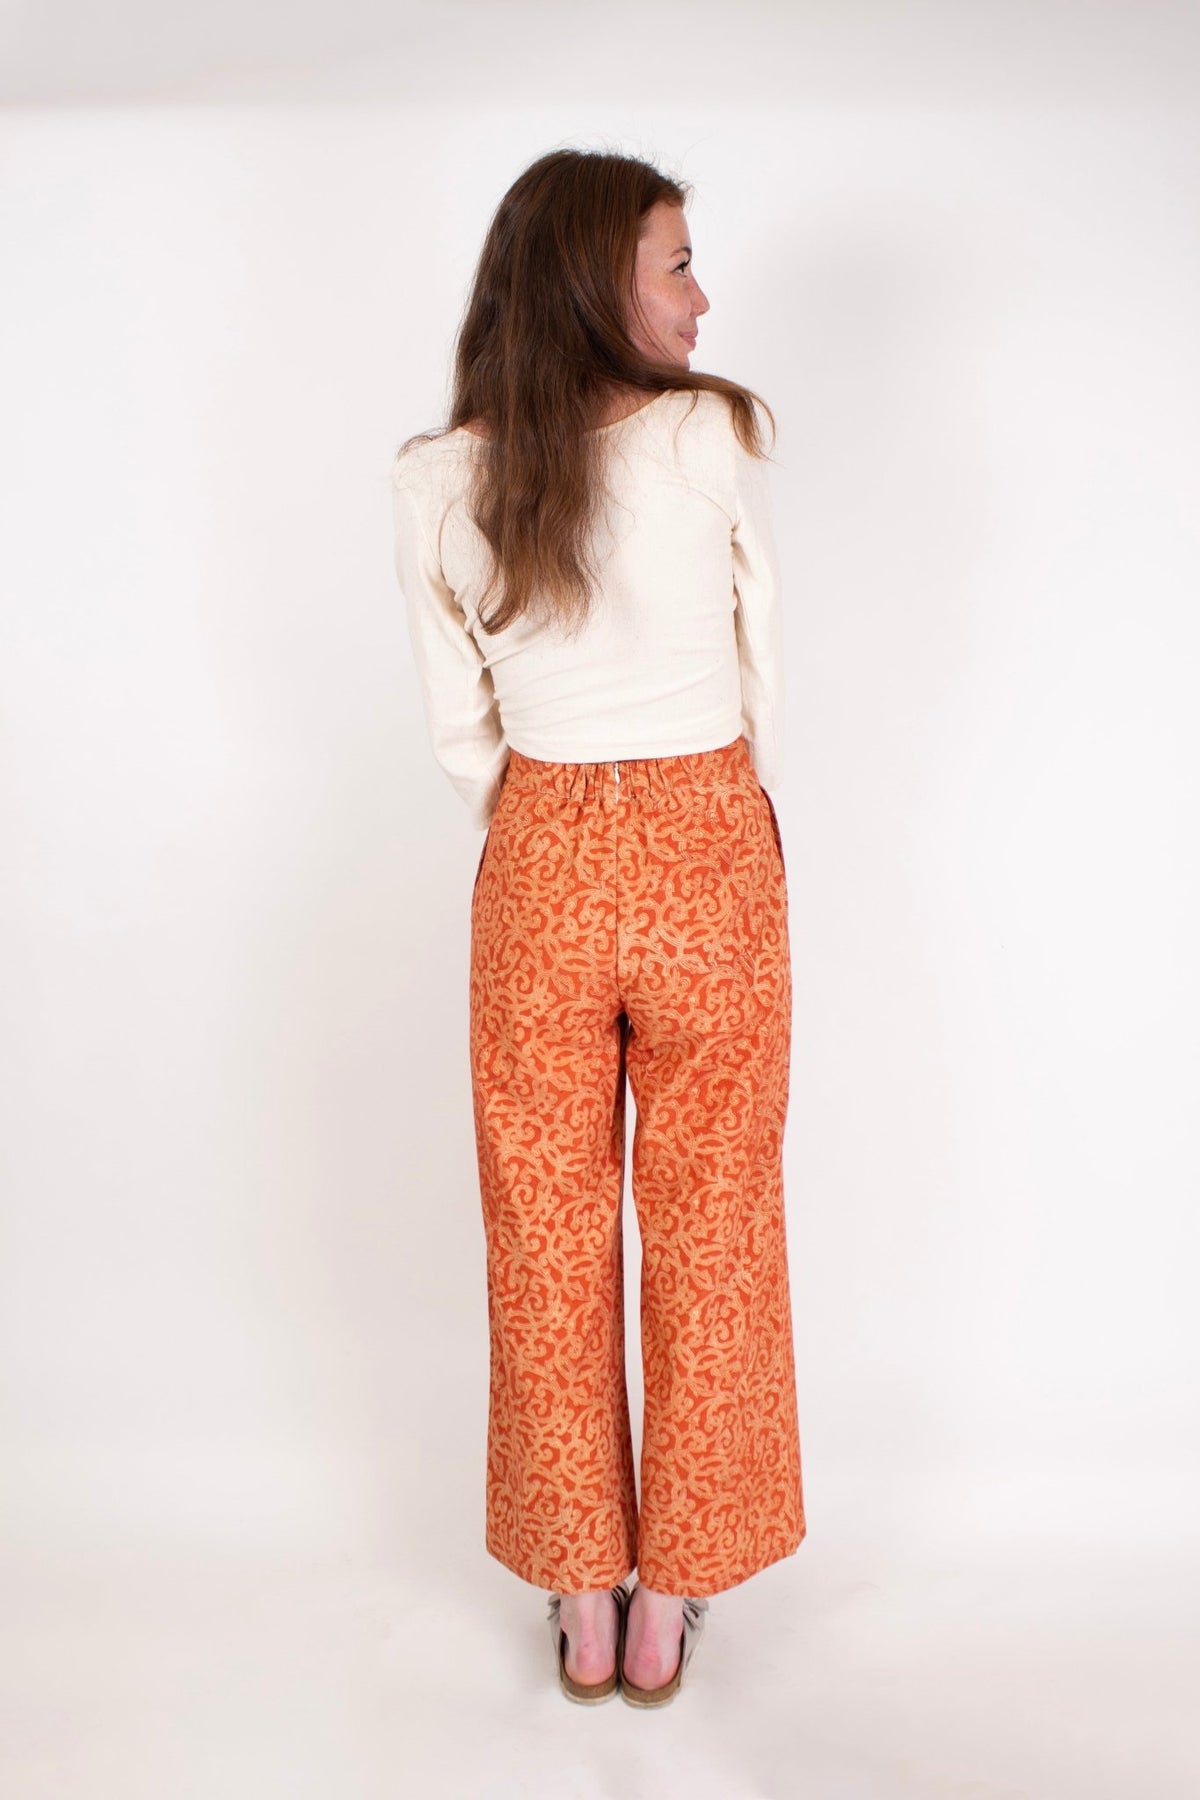 Pantalon SAGARA - Coton bio - Imprimé Kama - Pantalon - Azaadi, la mode responsable accessible